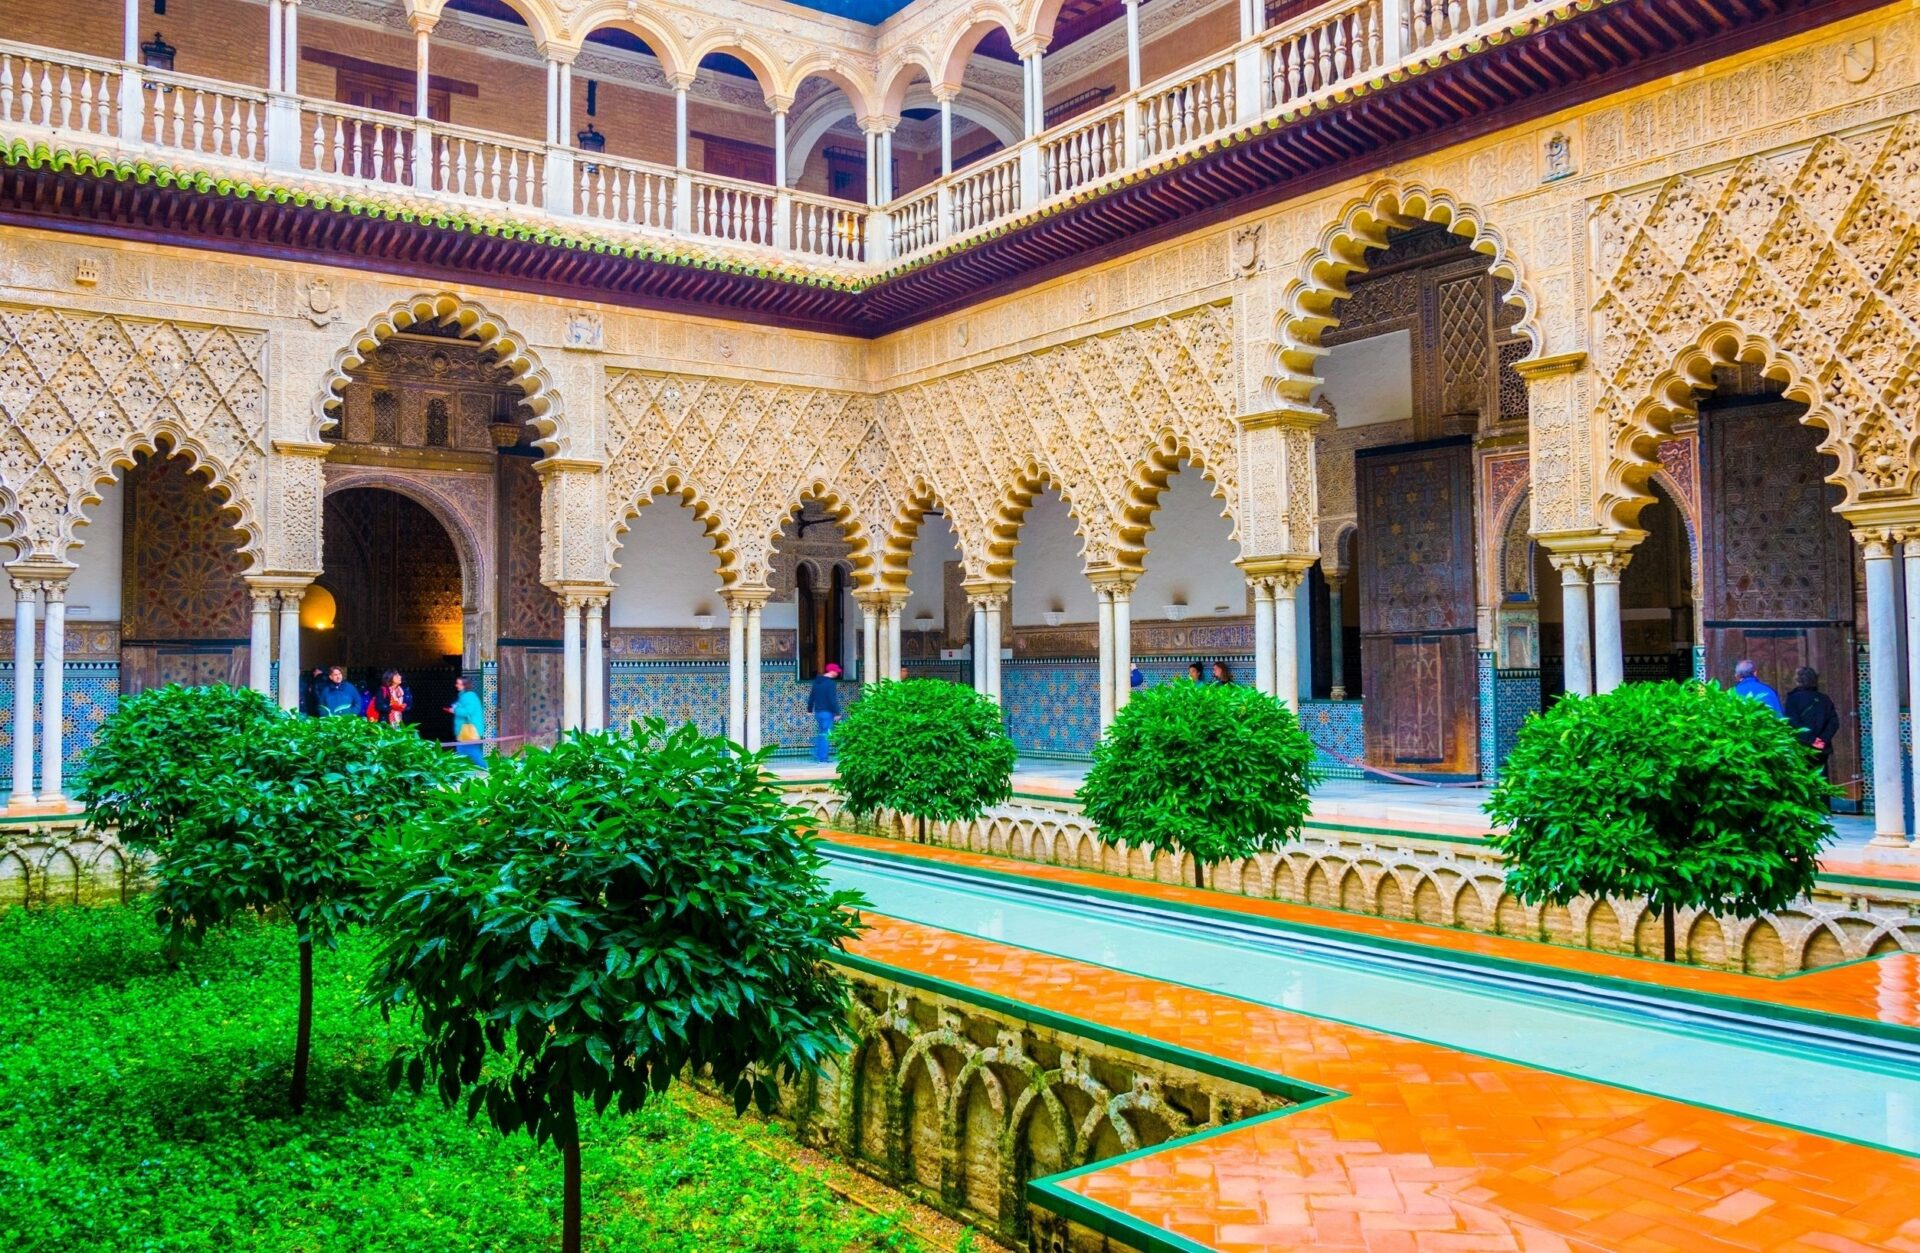 Visite o Real Alcázar de Sevilha